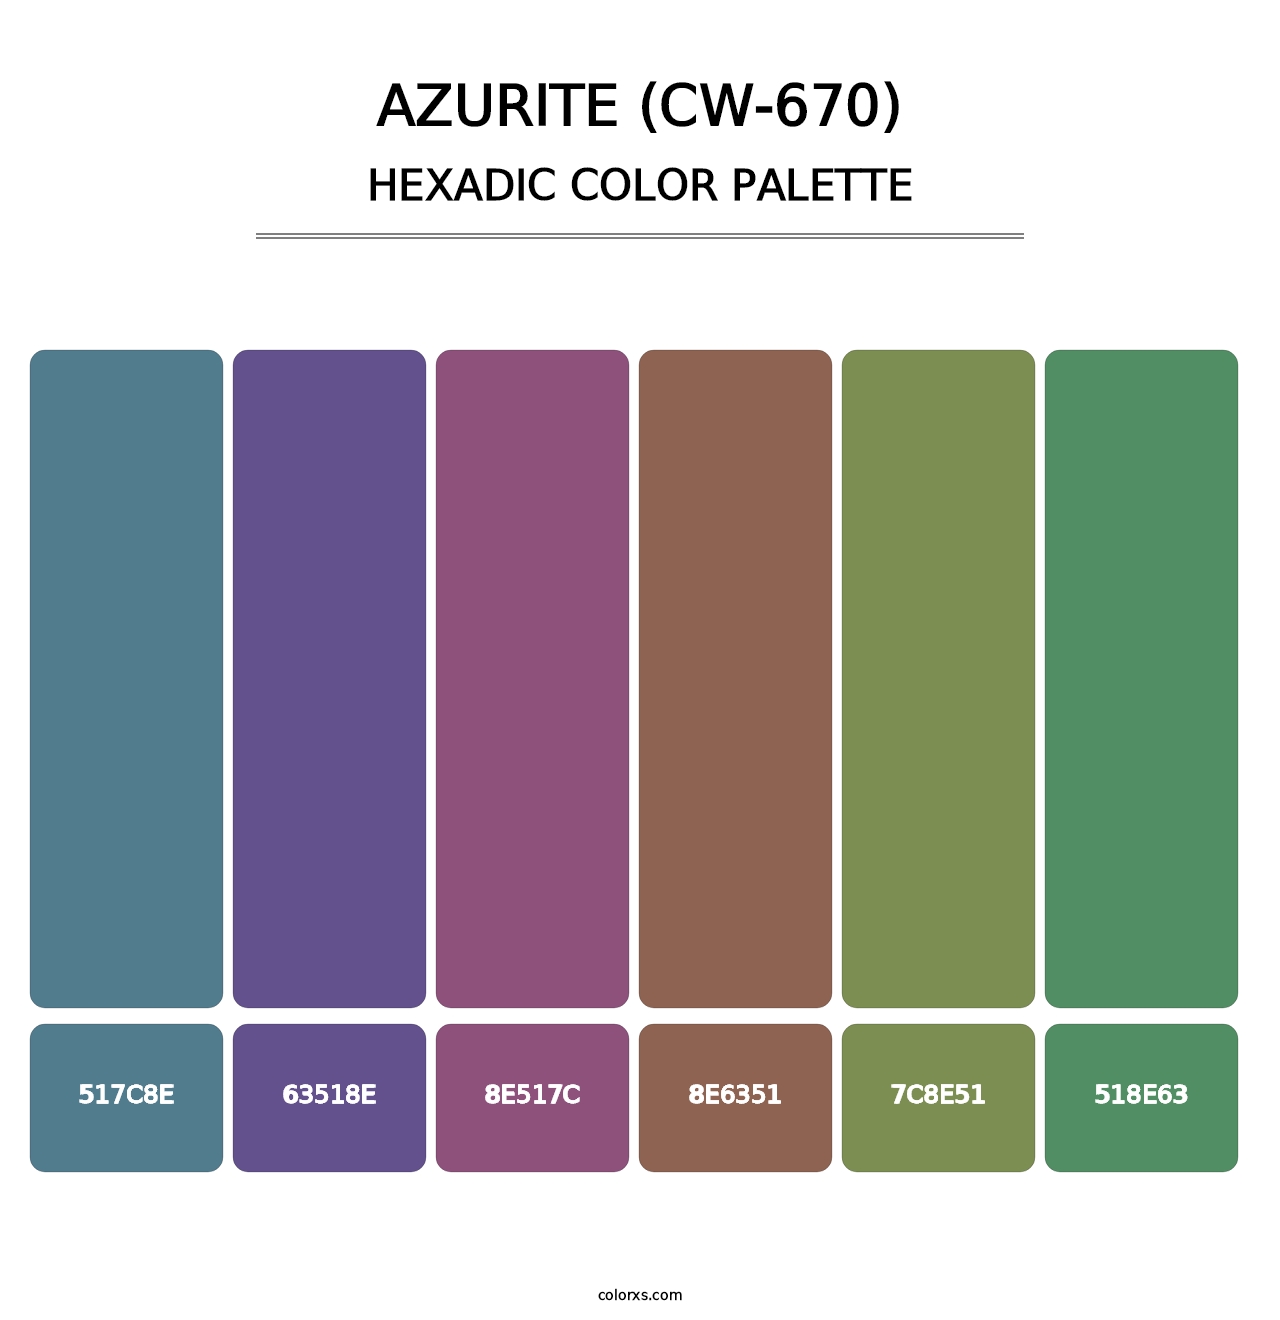 Azurite (CW-670) - Hexadic Color Palette